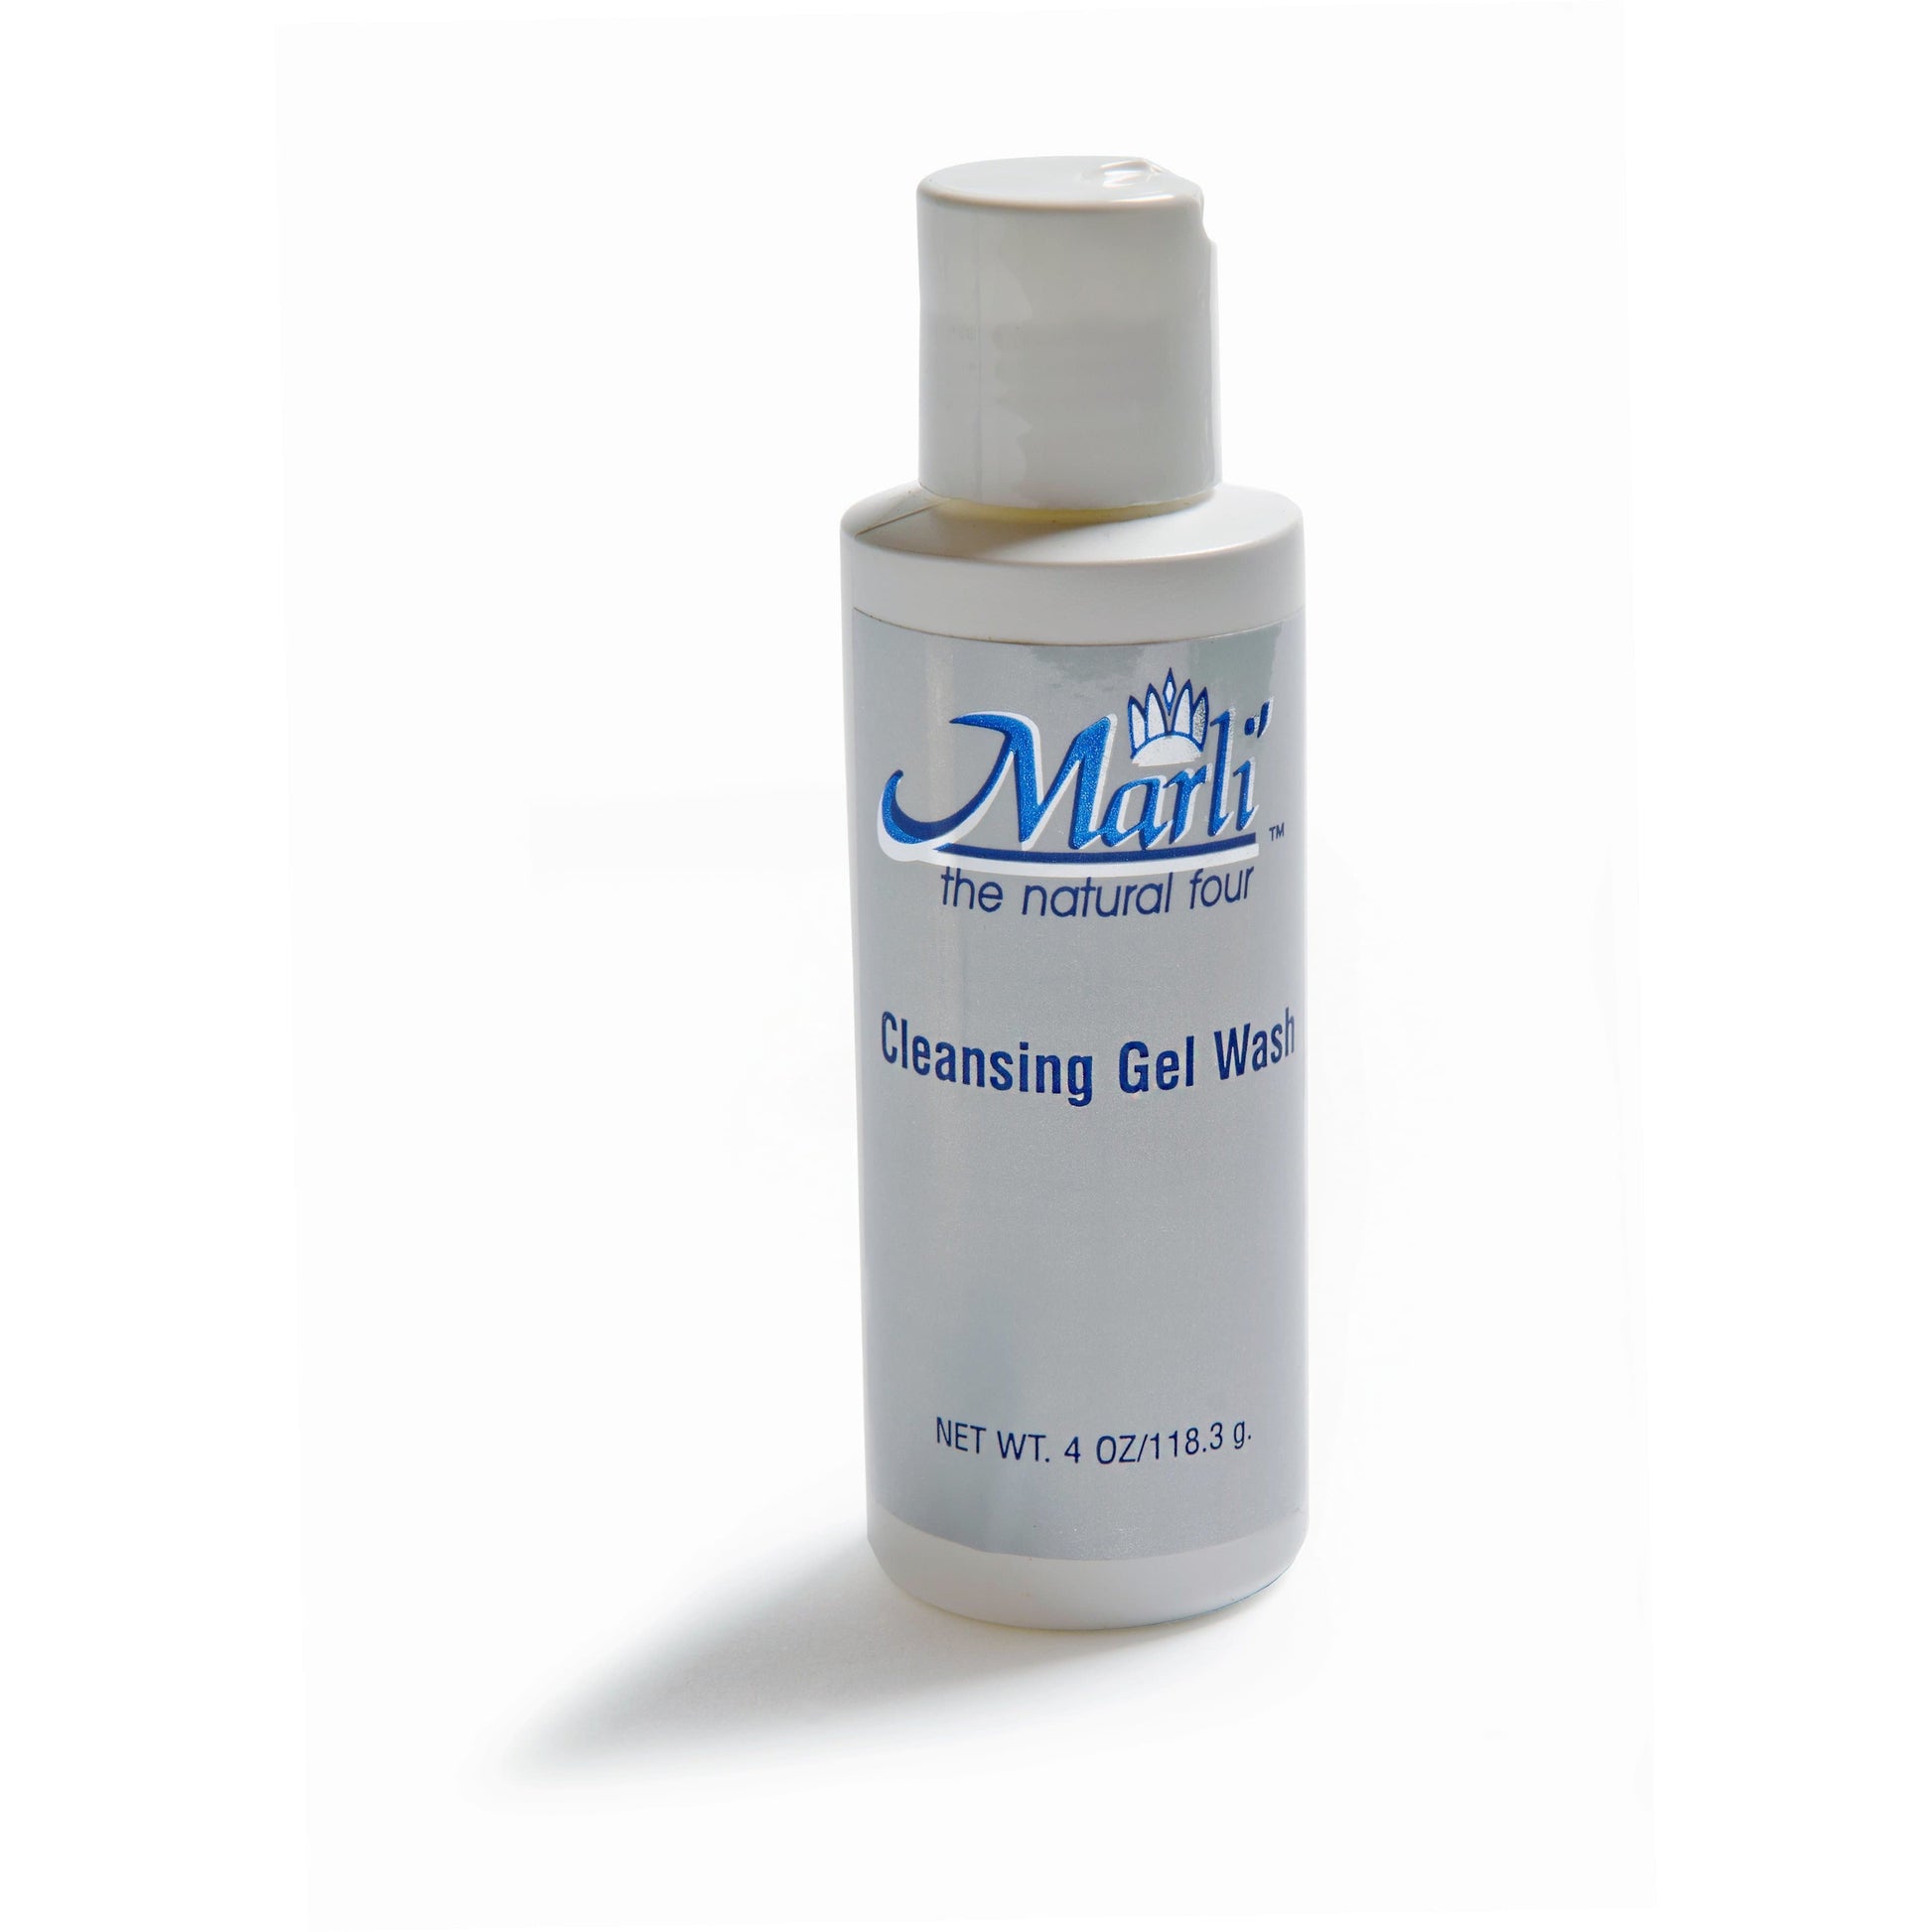 Rapid Wrinkle Erase Marli Complete Skin Care Kit - LOLA LUXE